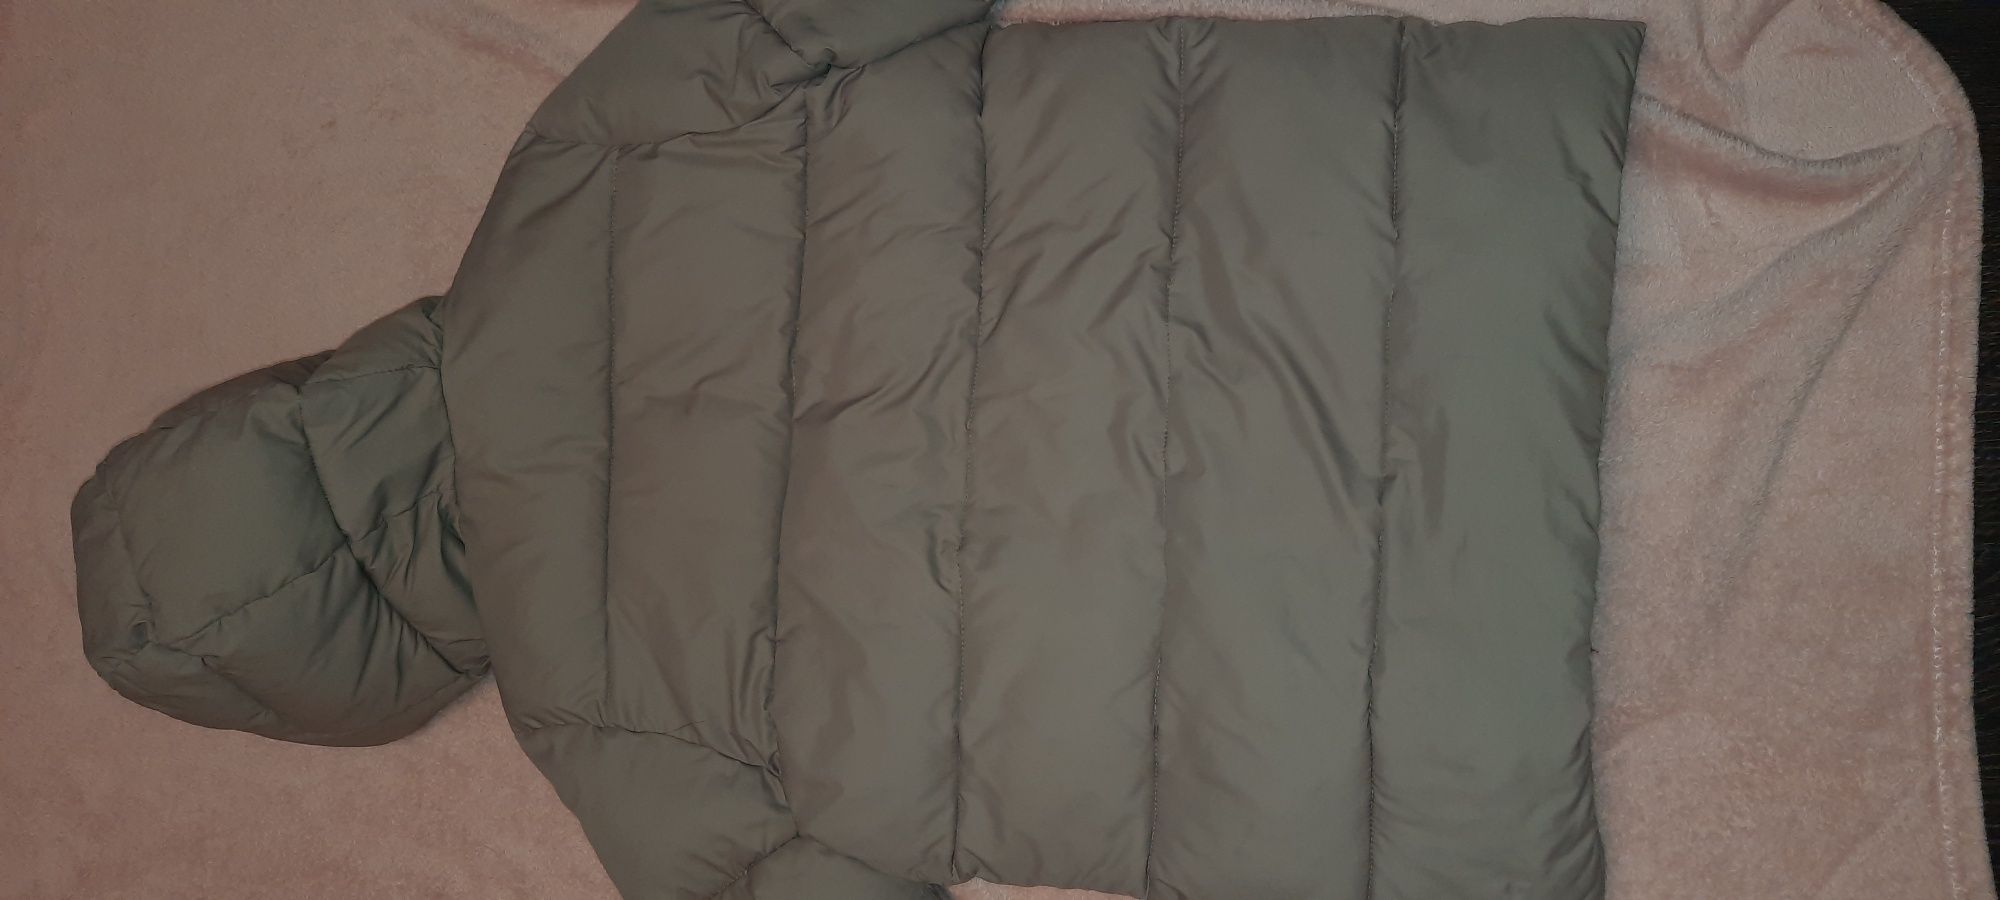 Зимняя курточка для девочки на р. 146-152 см.